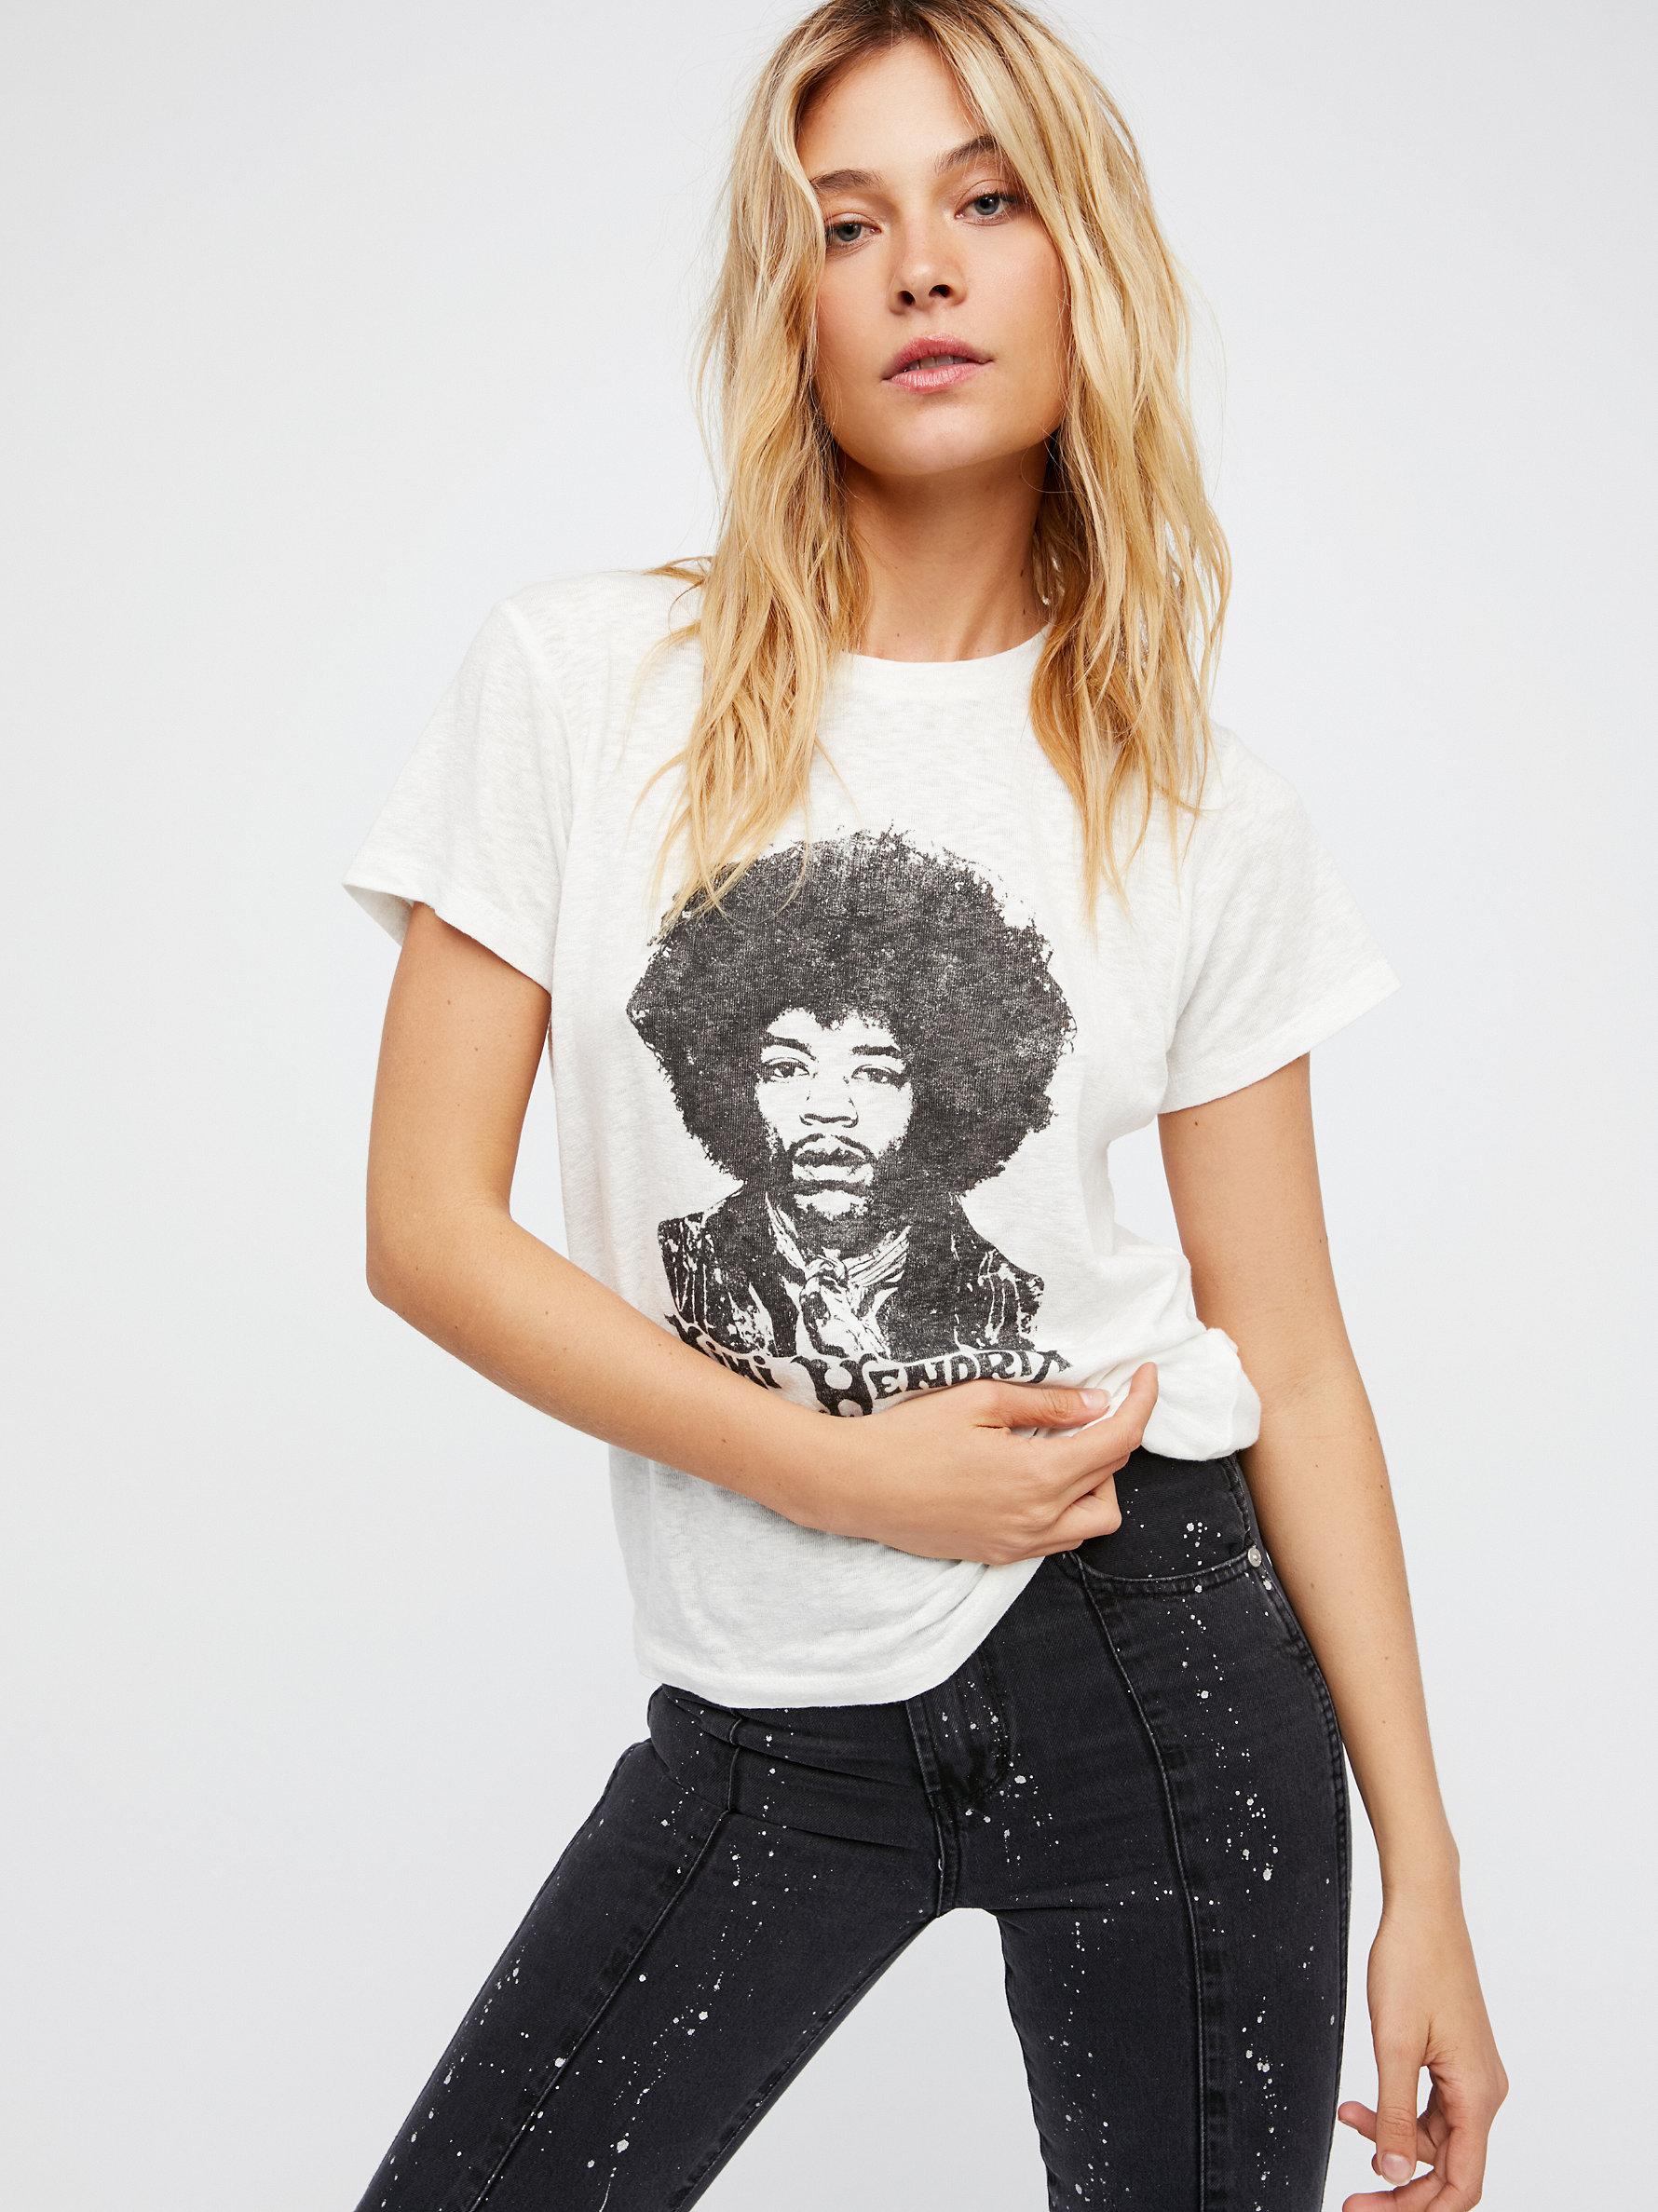 Kleding Gender-neutrale kleding volwassenen Tops & T-shirts T-shirts T-shirts met print Jaren negentig Jimi Hendrix Tee 